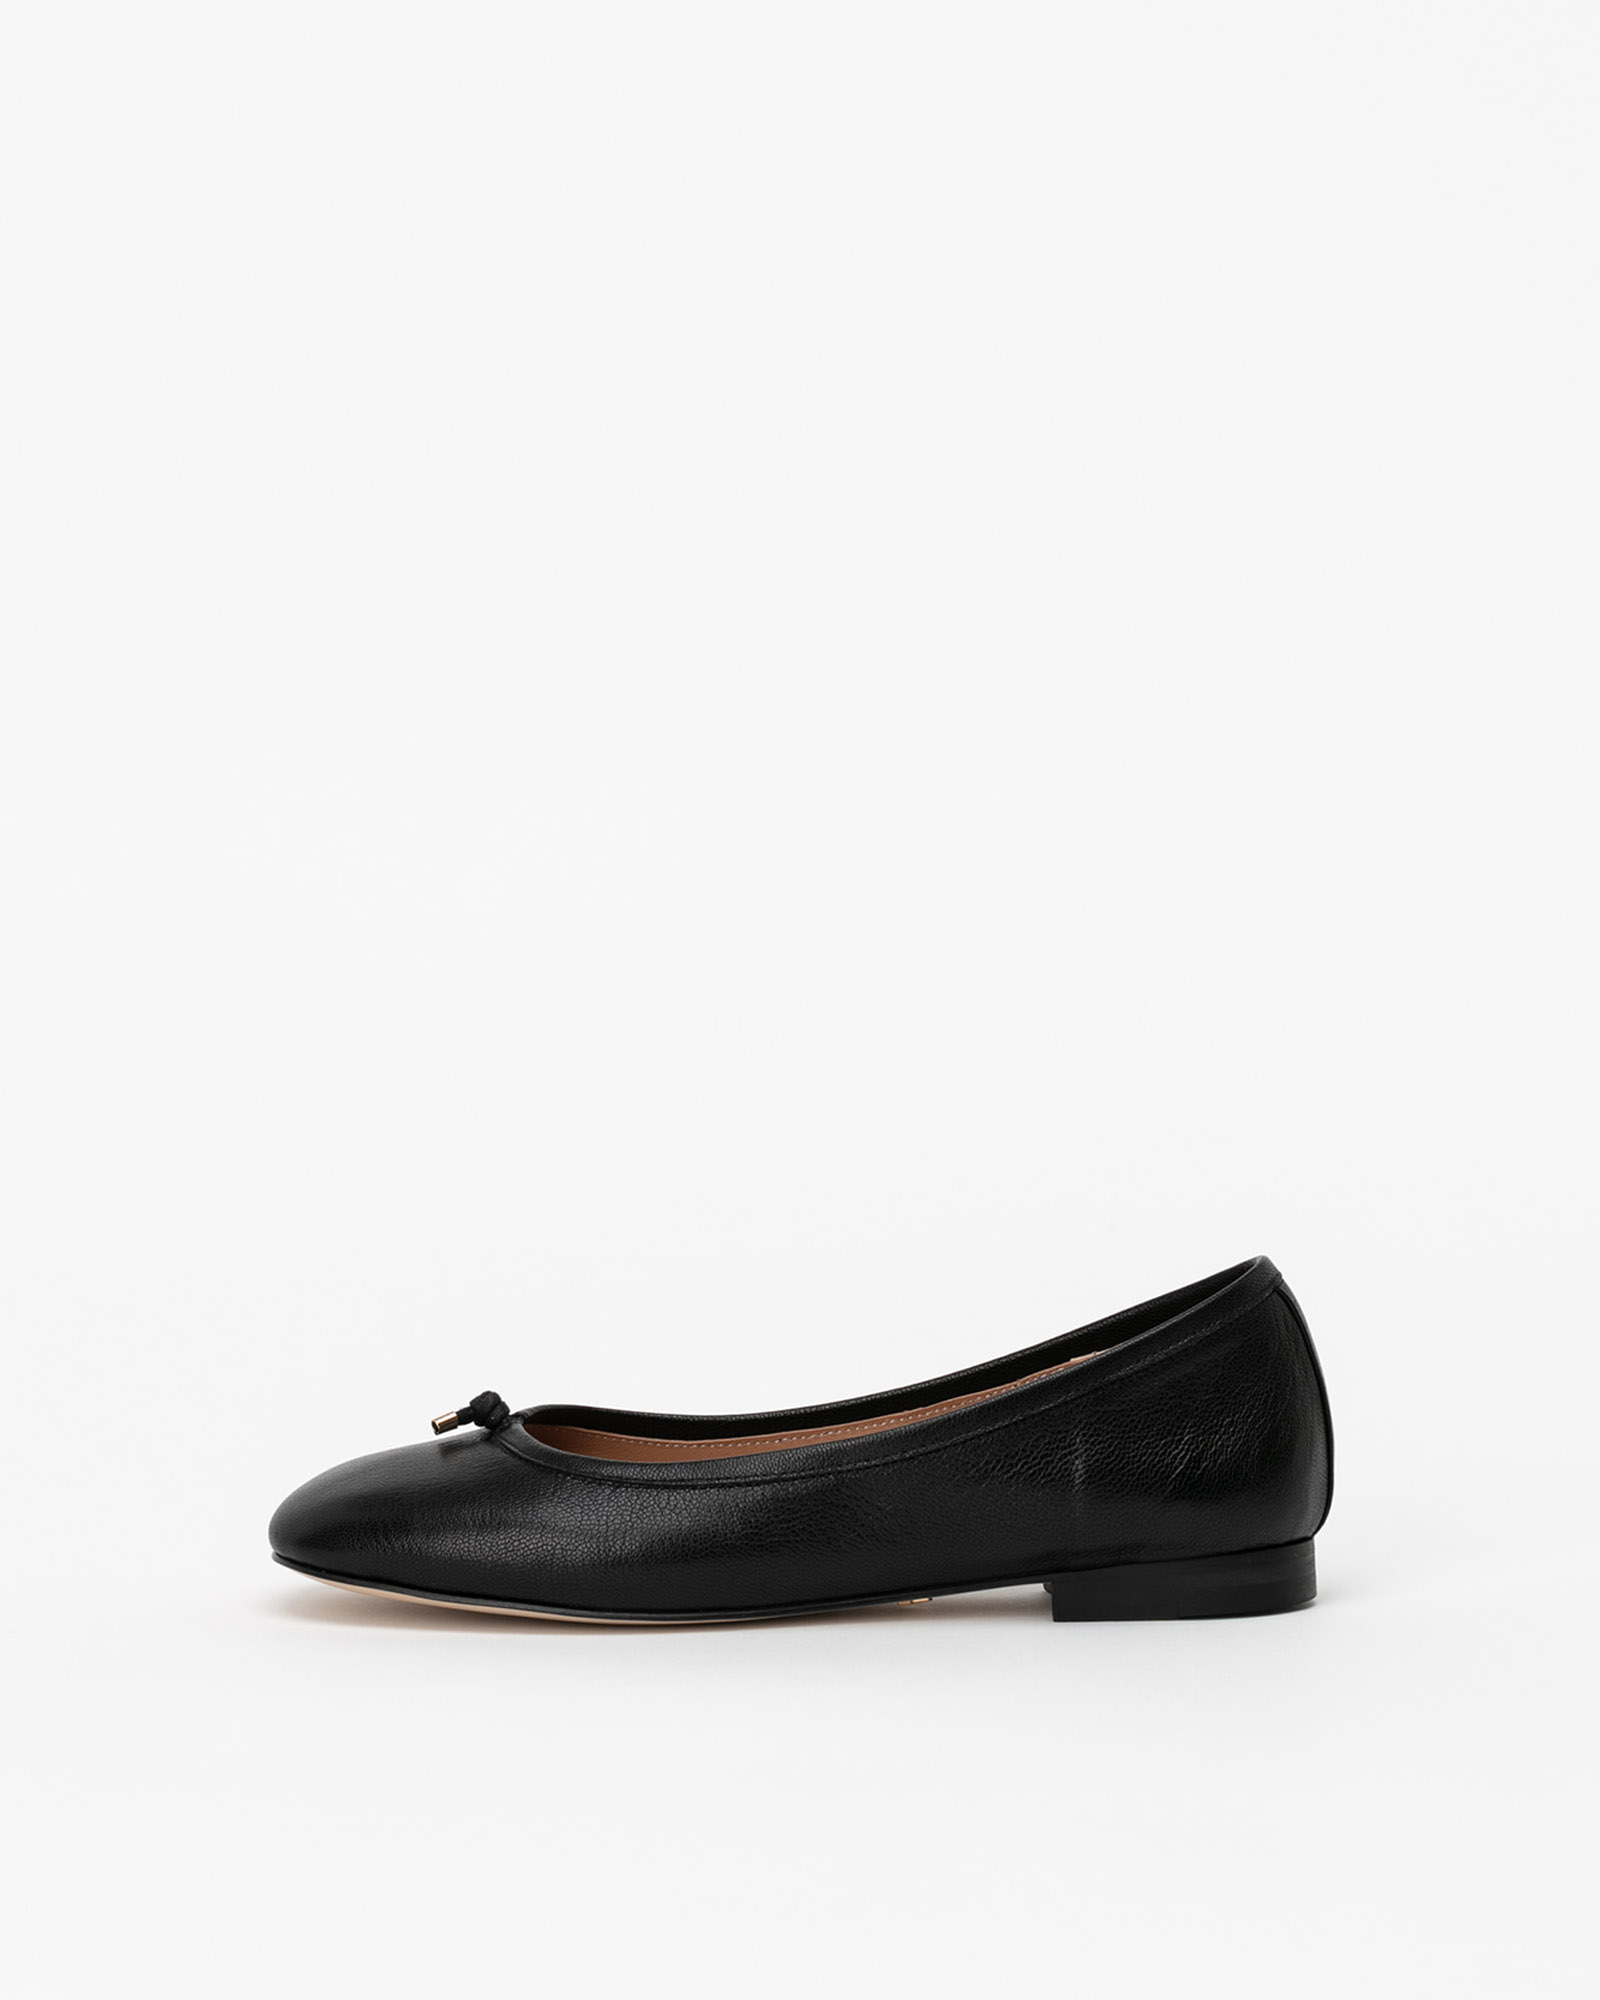 Meringue Soft Flat Shoes in Black